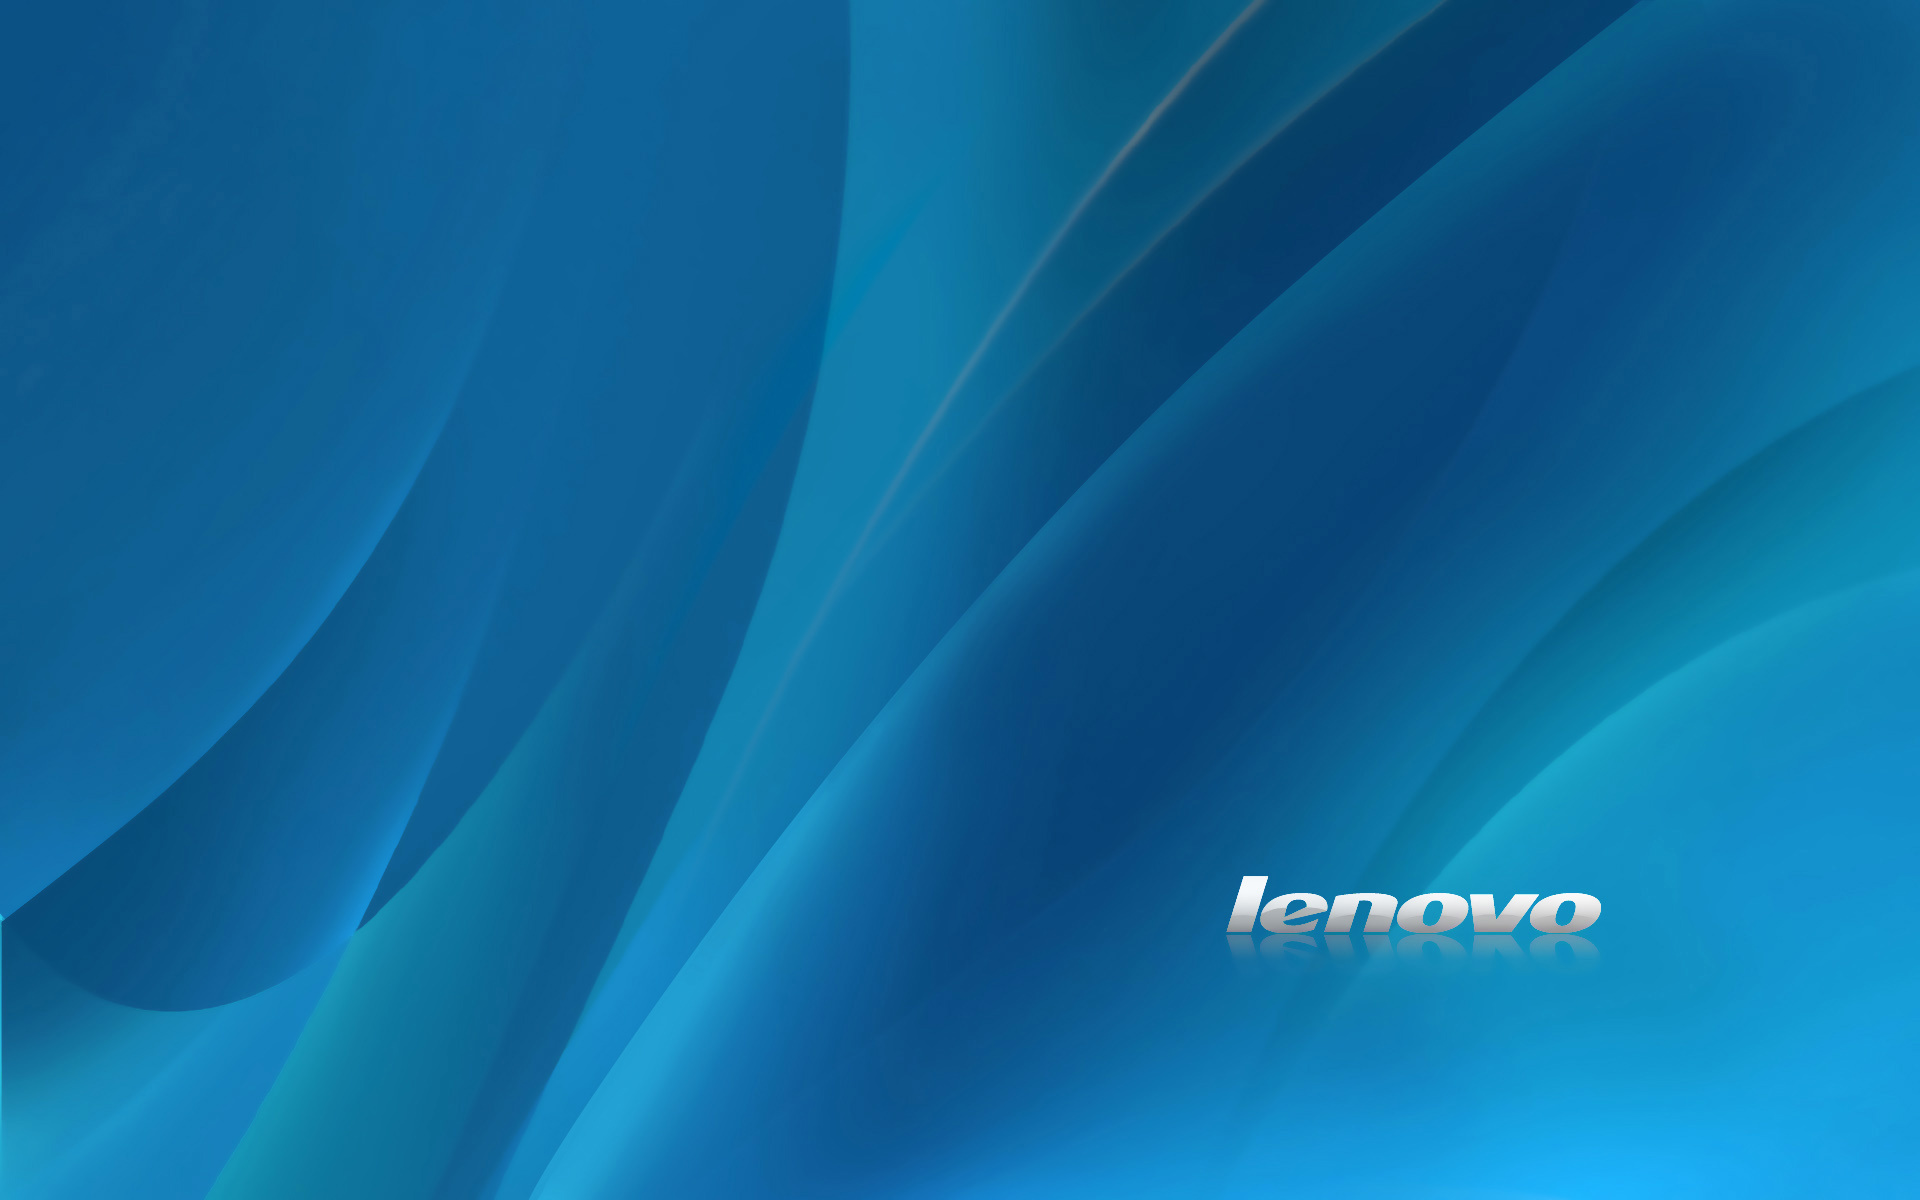 Lenovo wallpaper 1920x1080, High-definition resolution, Immersive visuals, Stunning details, 1920x1200 HD Desktop